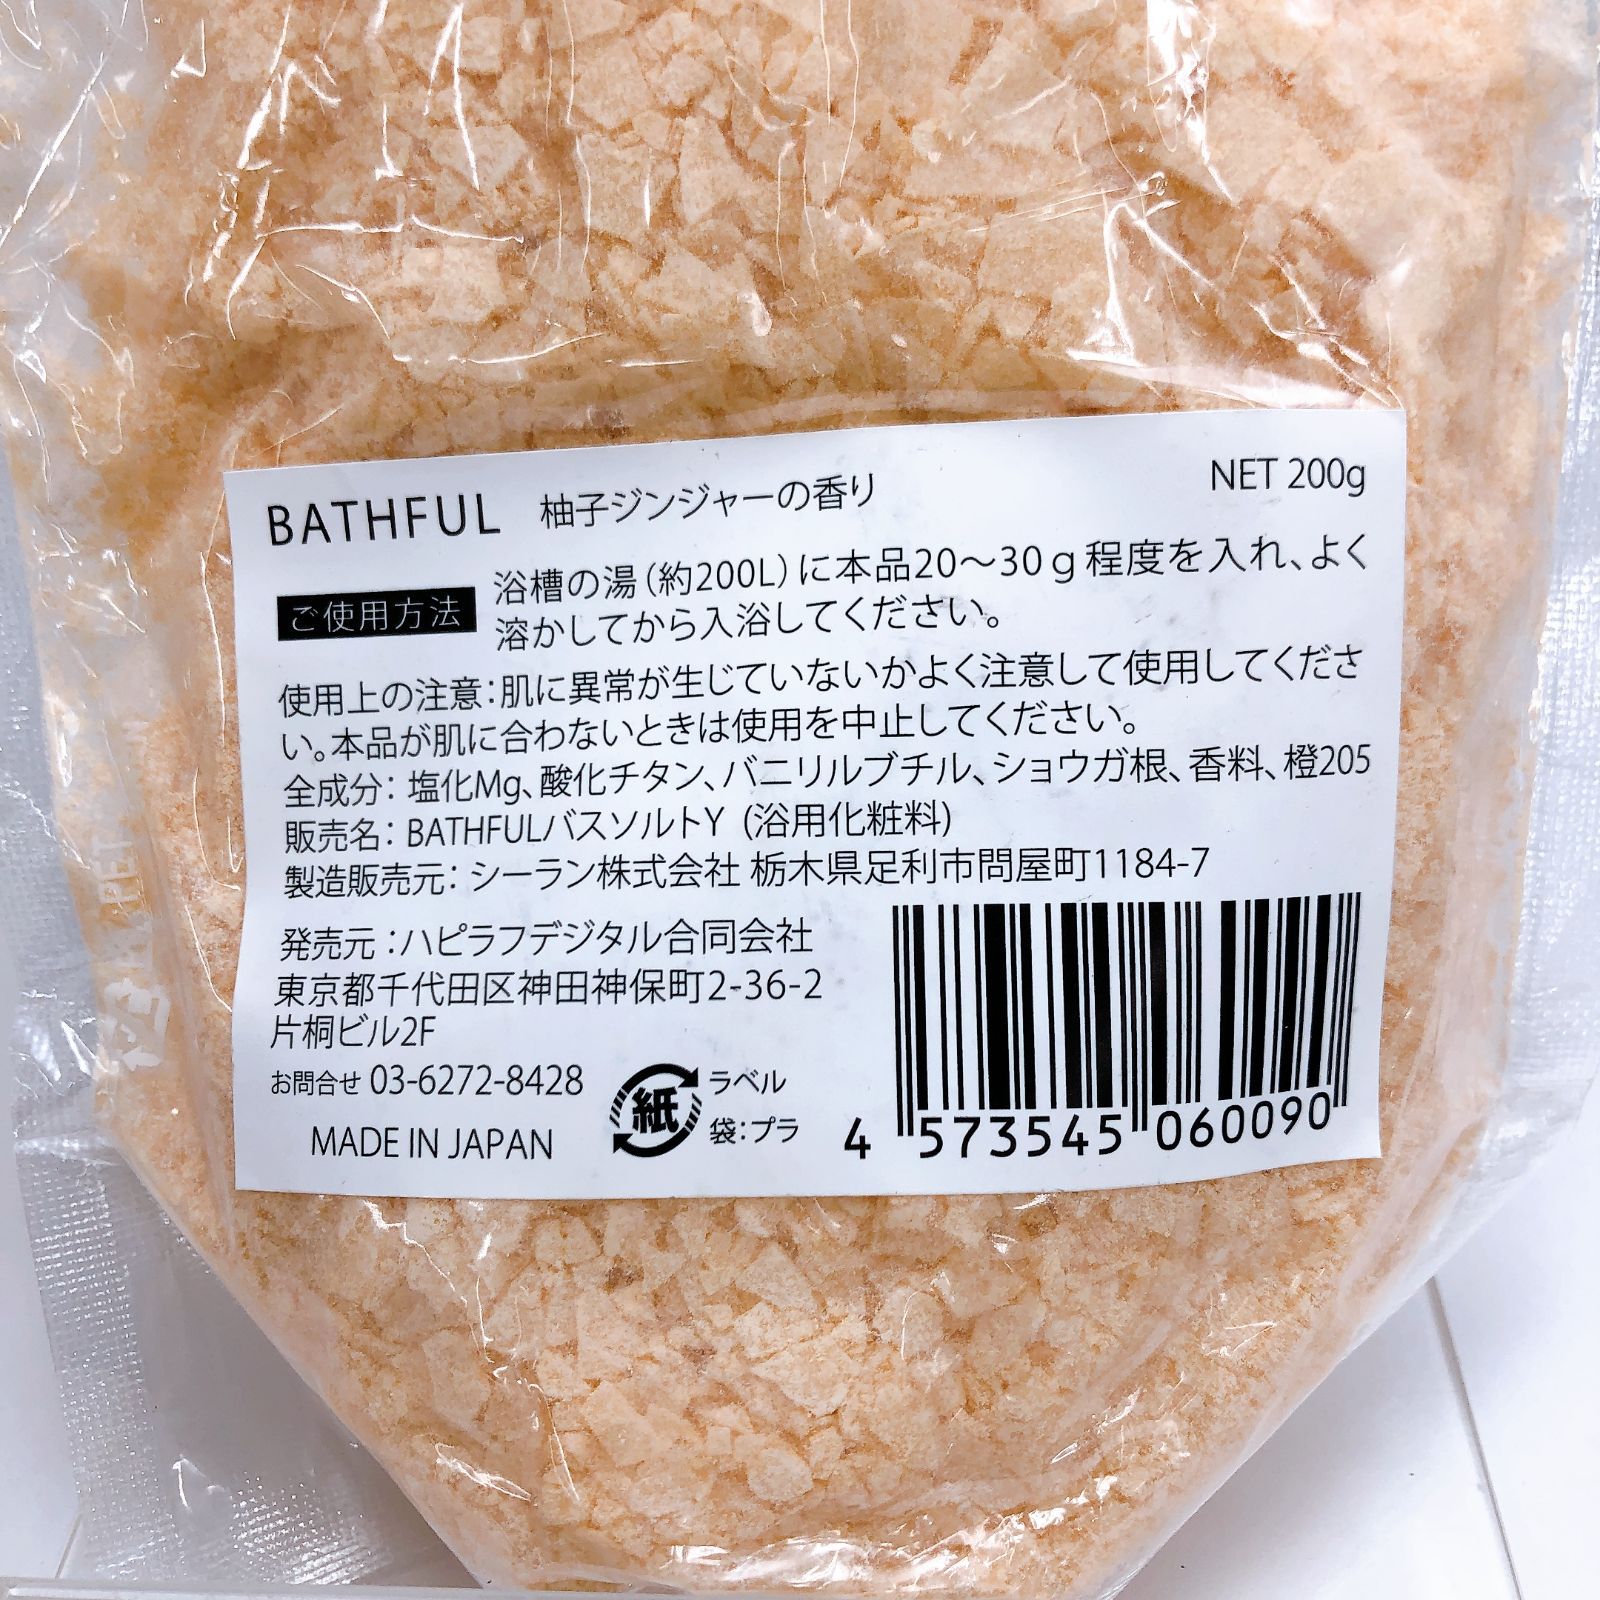 BATHFUL バスソルト ゆずジンジャーの香り 柚子 生姜 200g バス お風呂